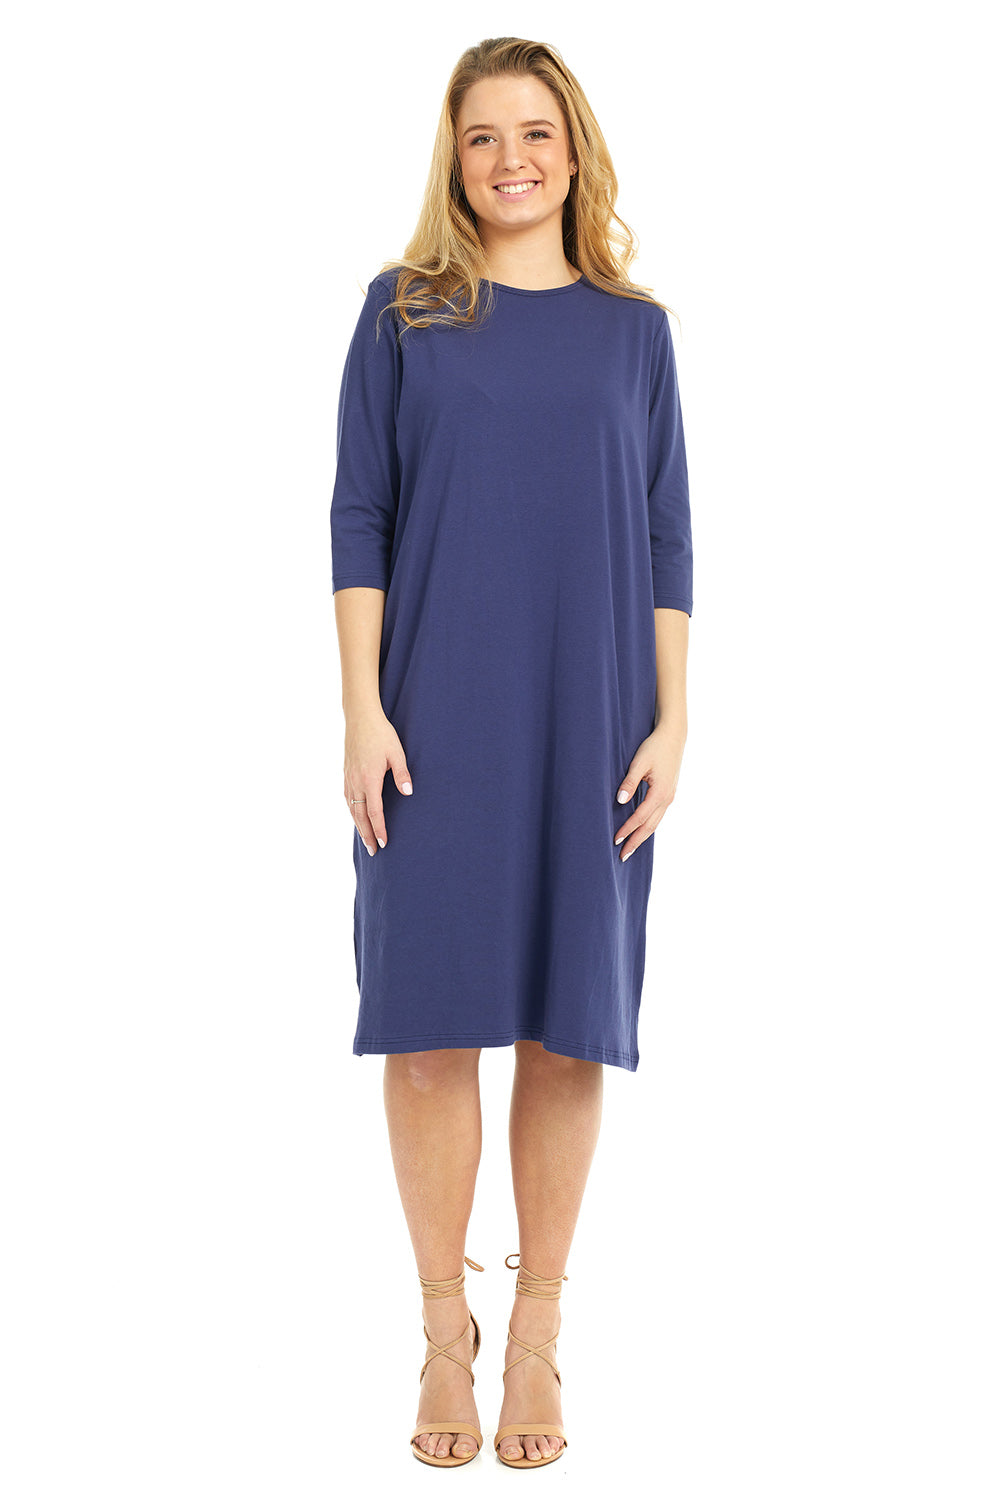 Esteez TEE Dress - Women's Cotton Spandex Casual Shift Dress - 3/4 Sleeves - NAVY